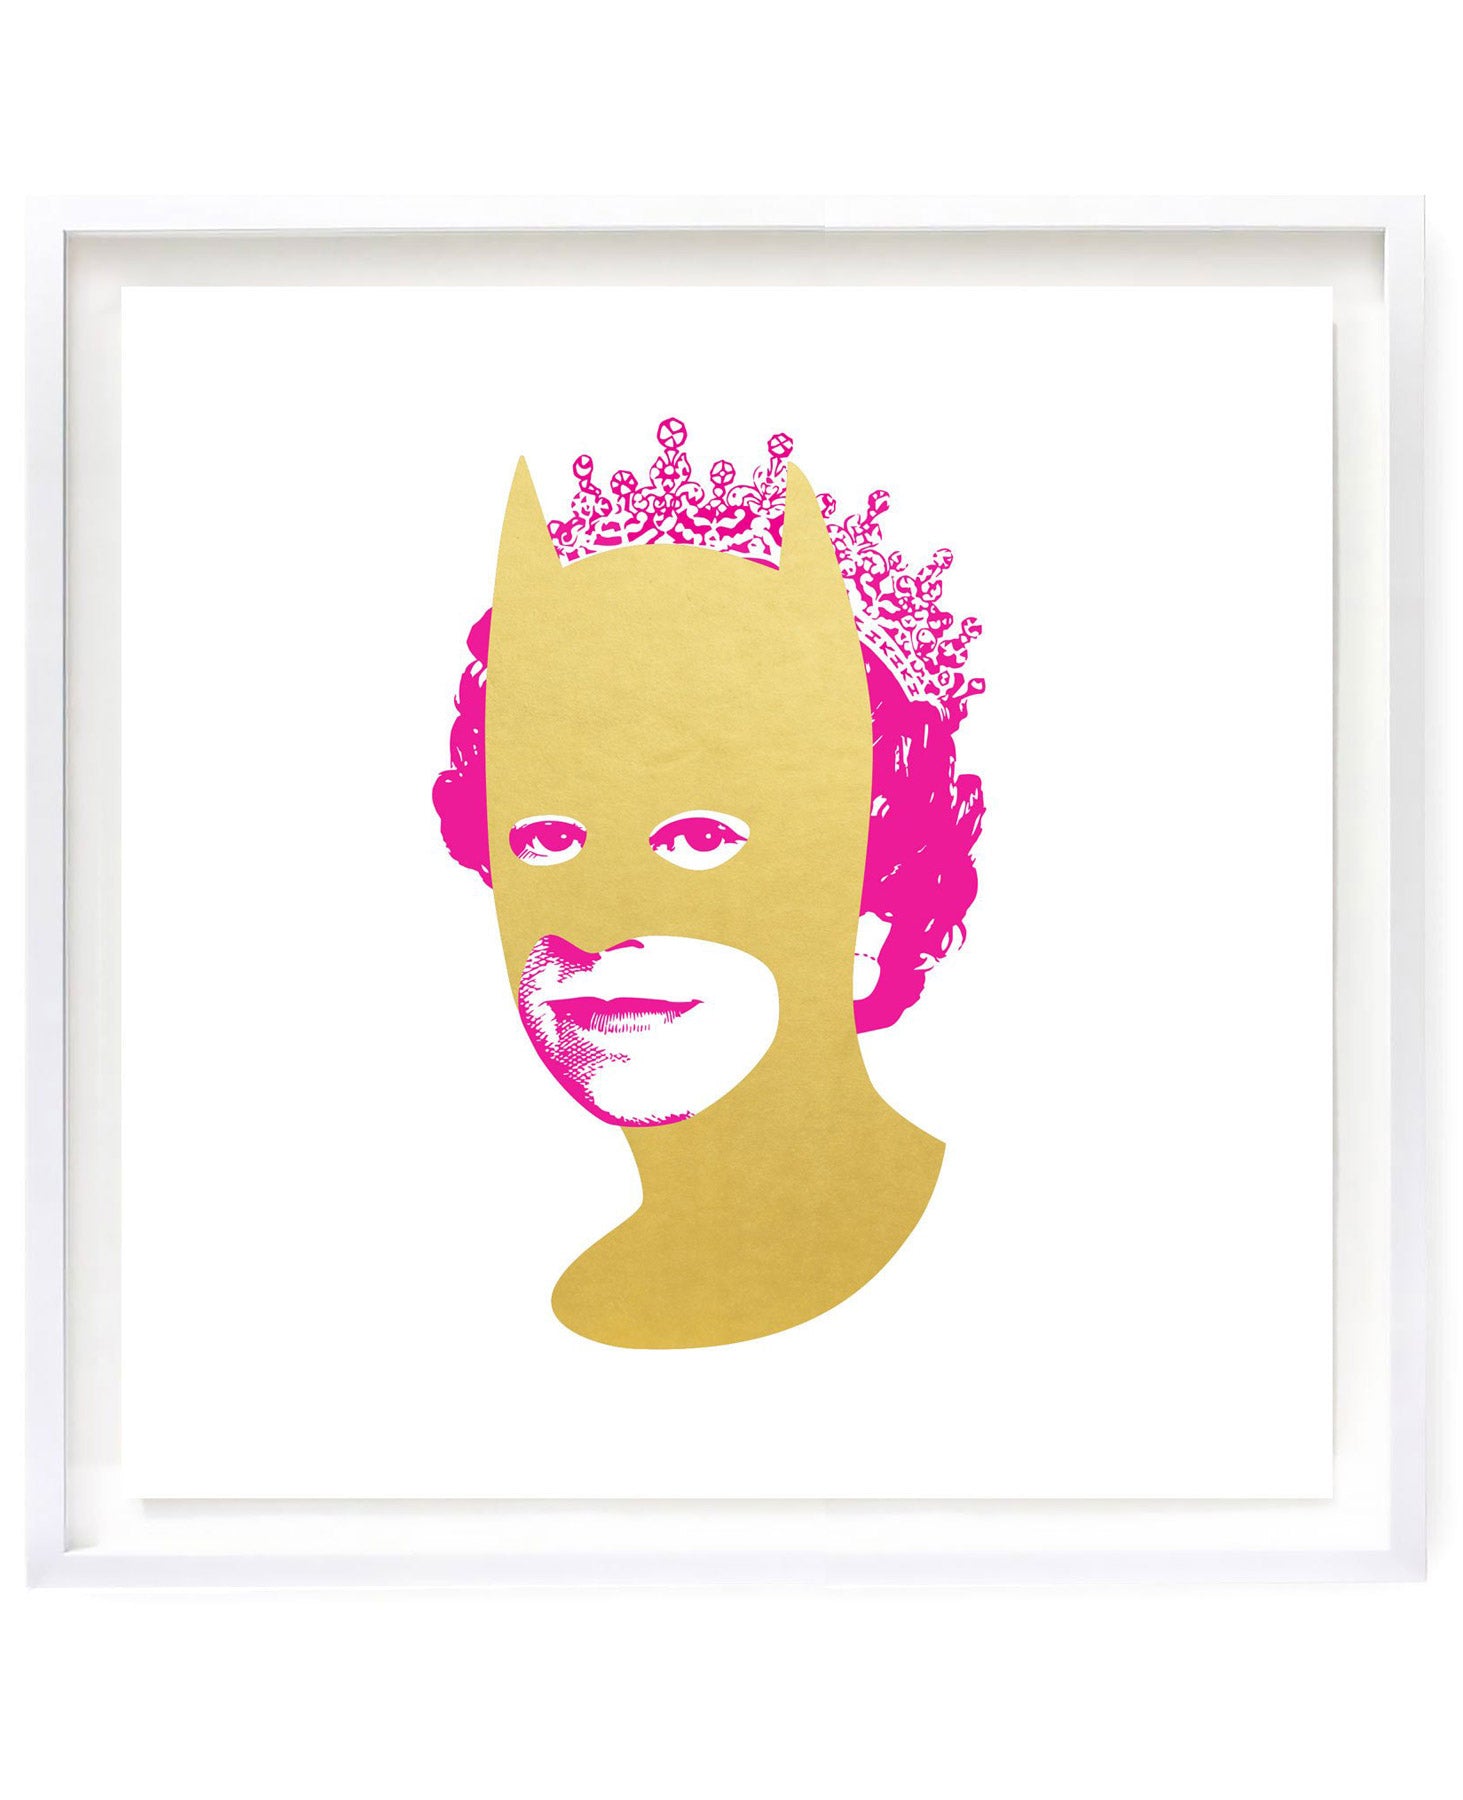 Pink Queen Elizabeth II with superimposed gold batman mask